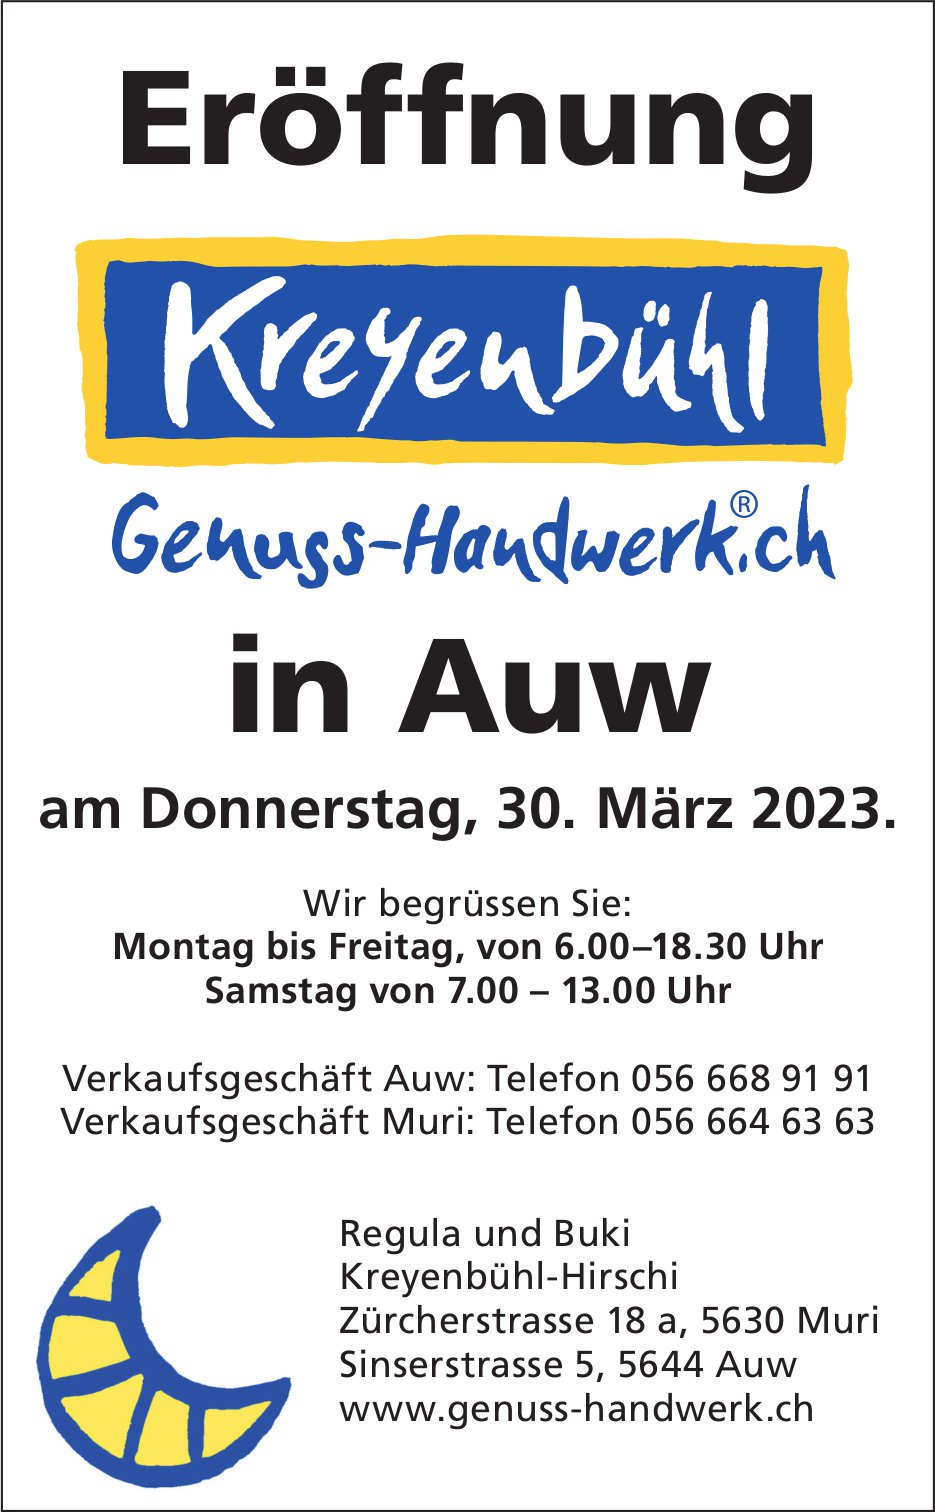 Eröffnung, 30. März, Kreyenbühl Bäckerei-Konditorei-Confiserie, Auw